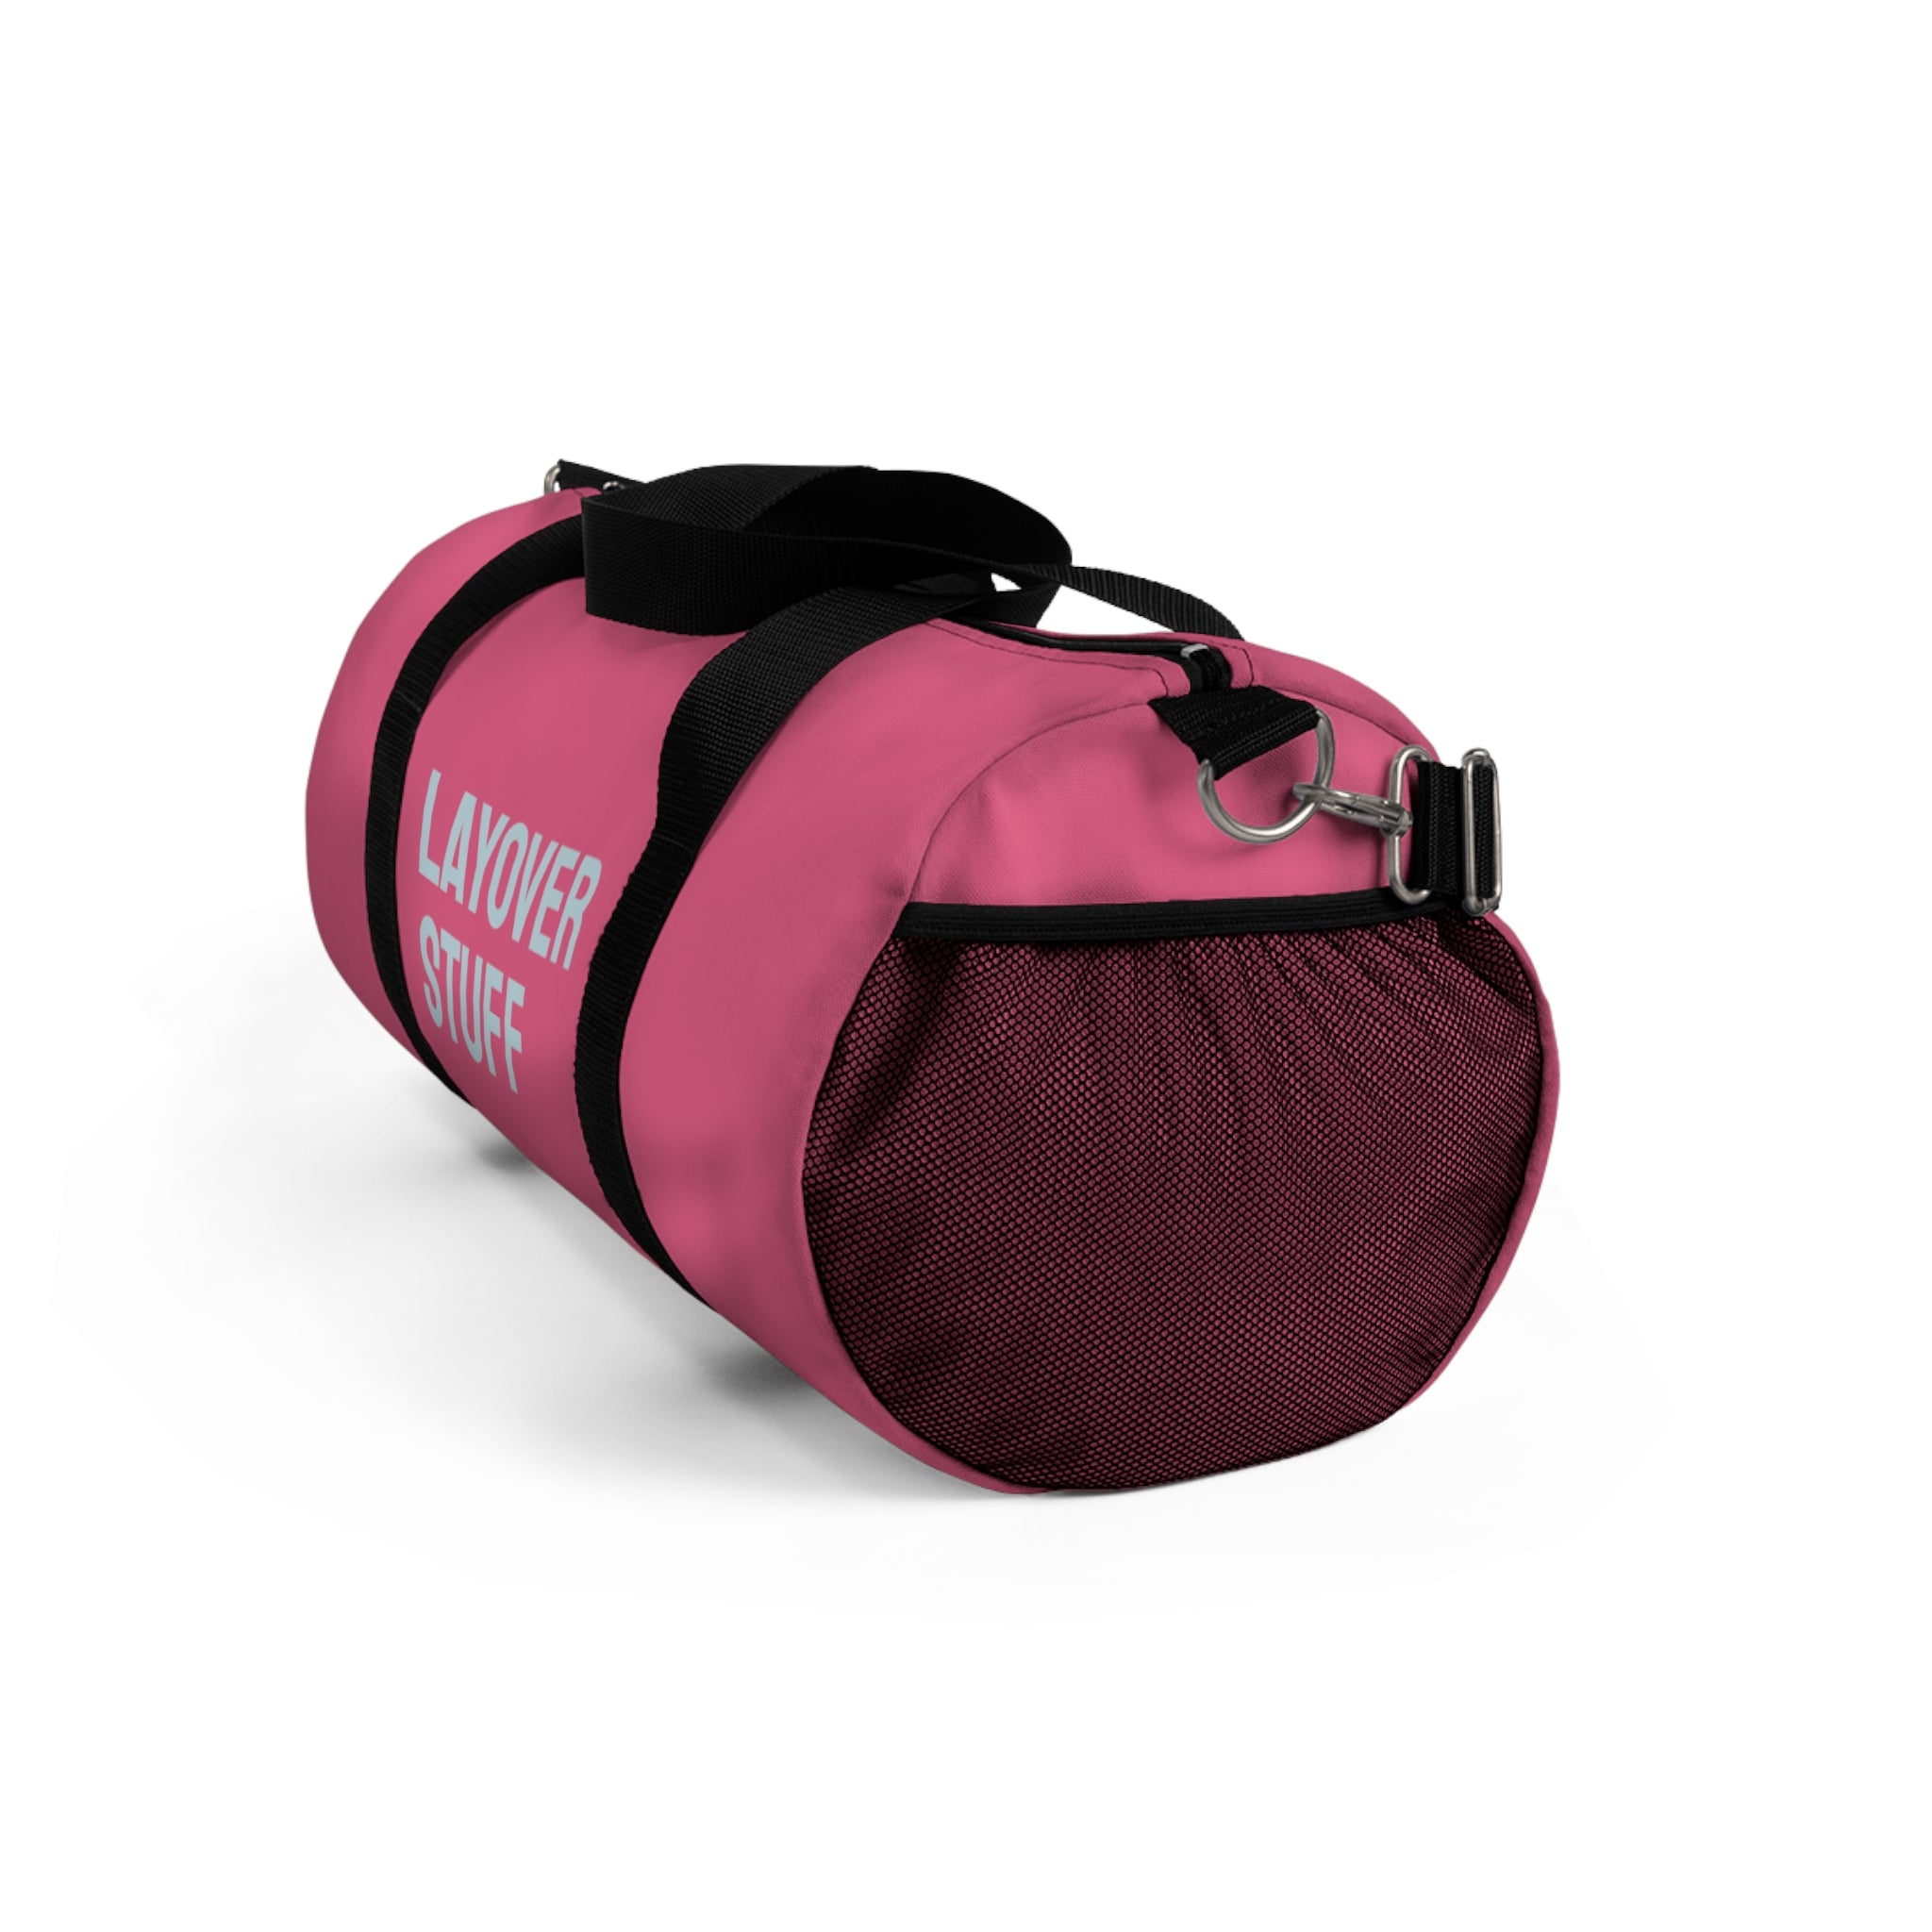 Layover stuff Duffle Bag (Pink)